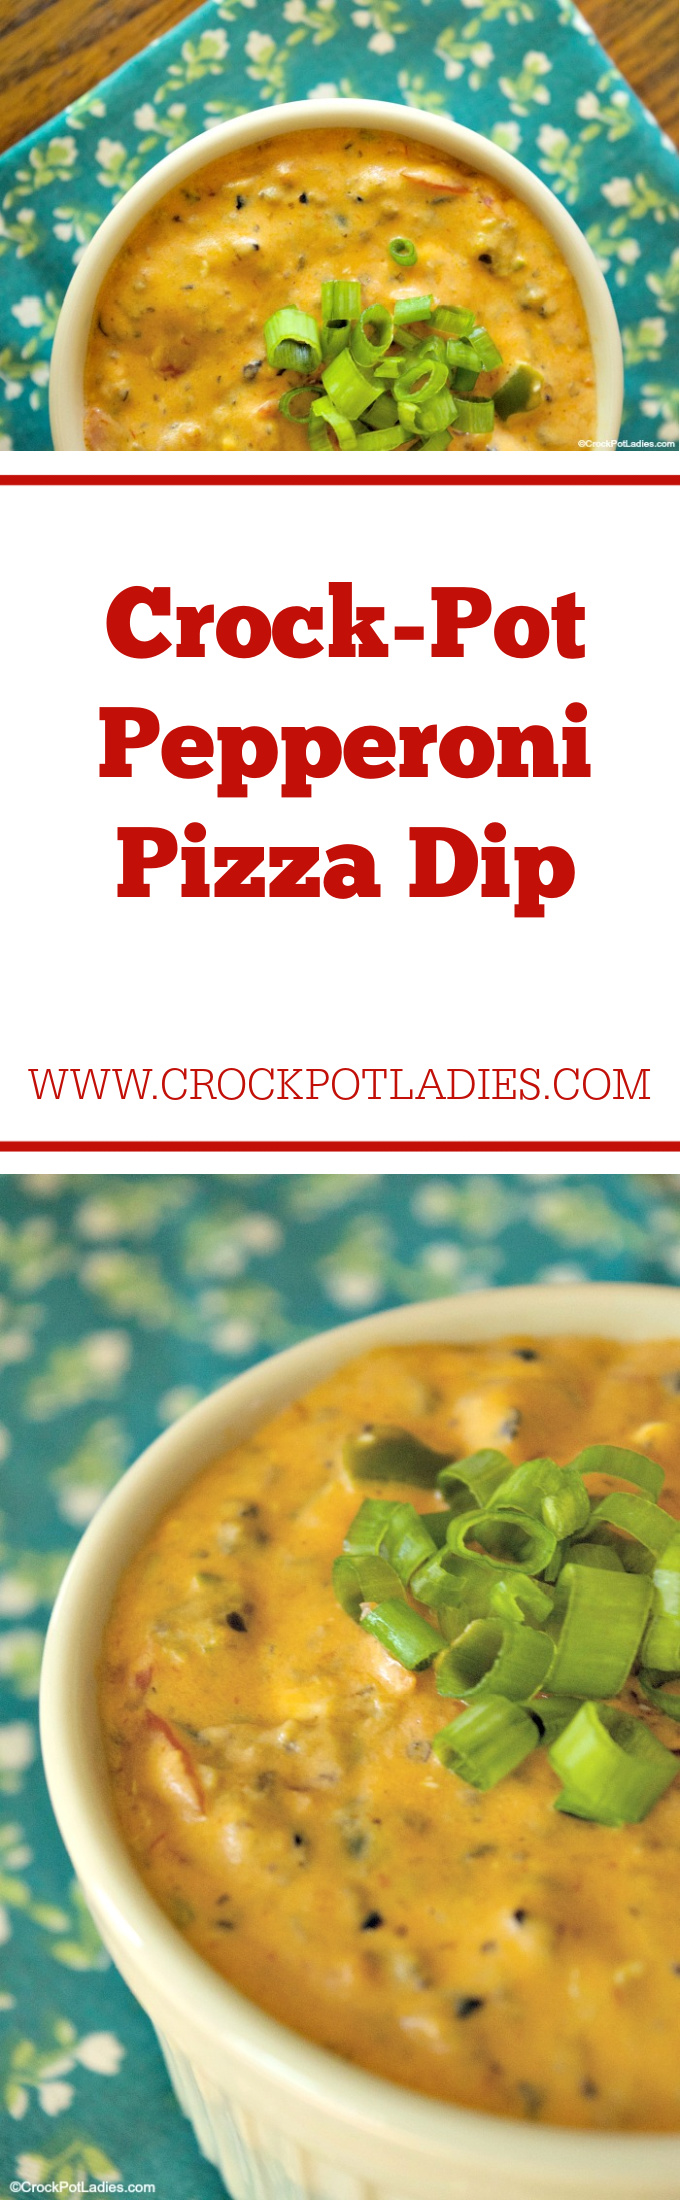 Crock-Pot Pepperoni Pizza Dip